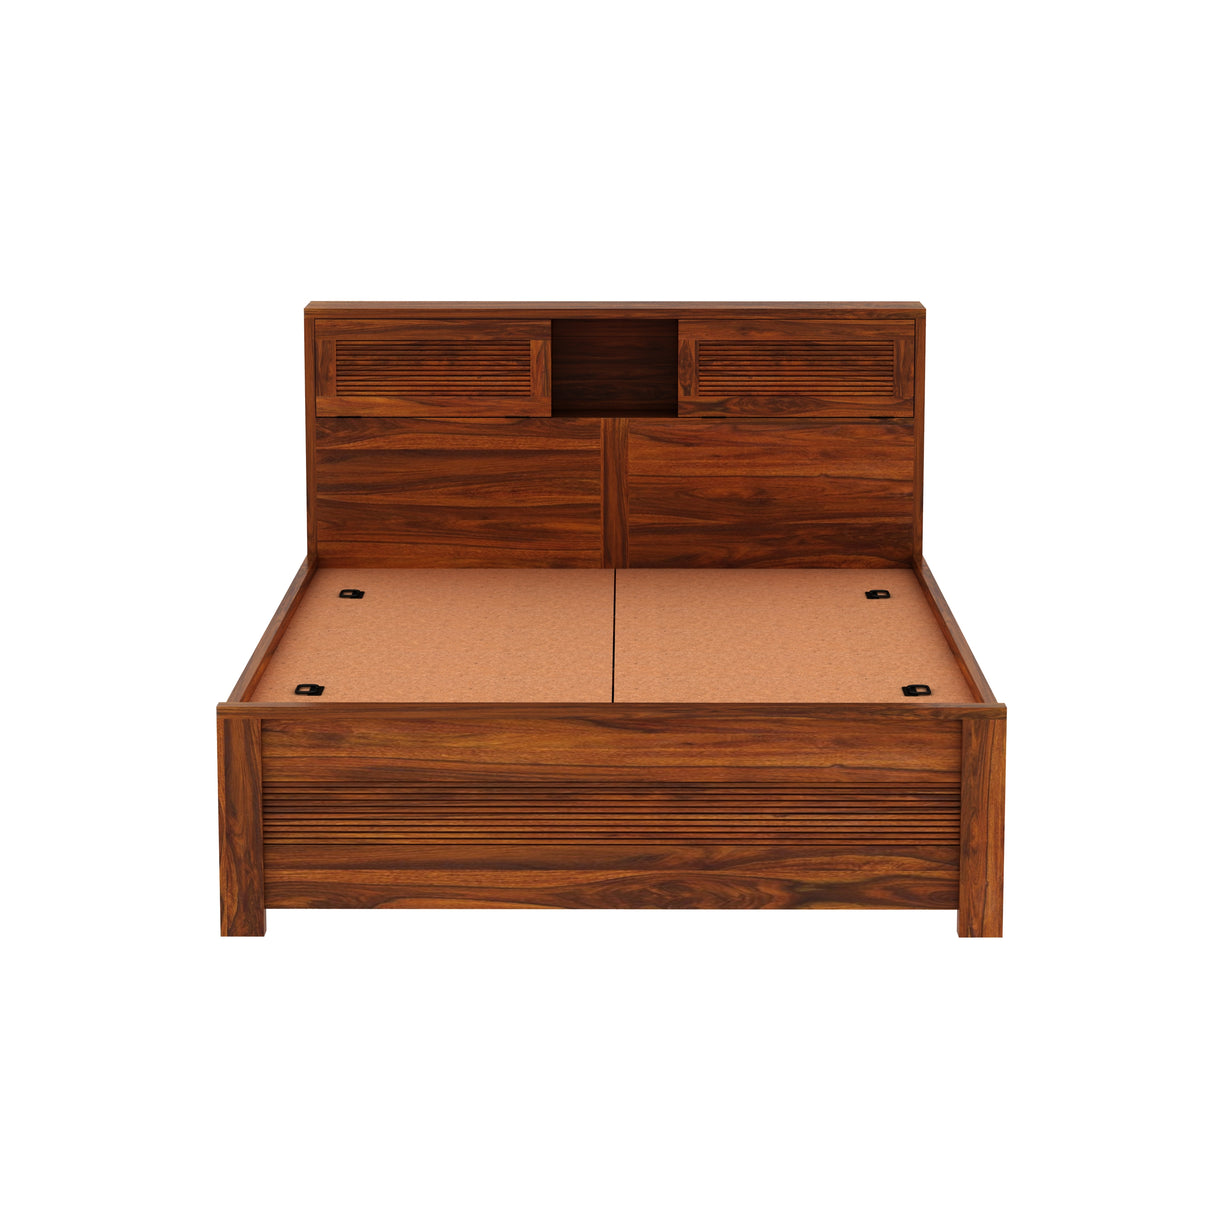 Maharaja Groove Solid Sheesham Wood Bed With Box Storage - 1 Year Warranty